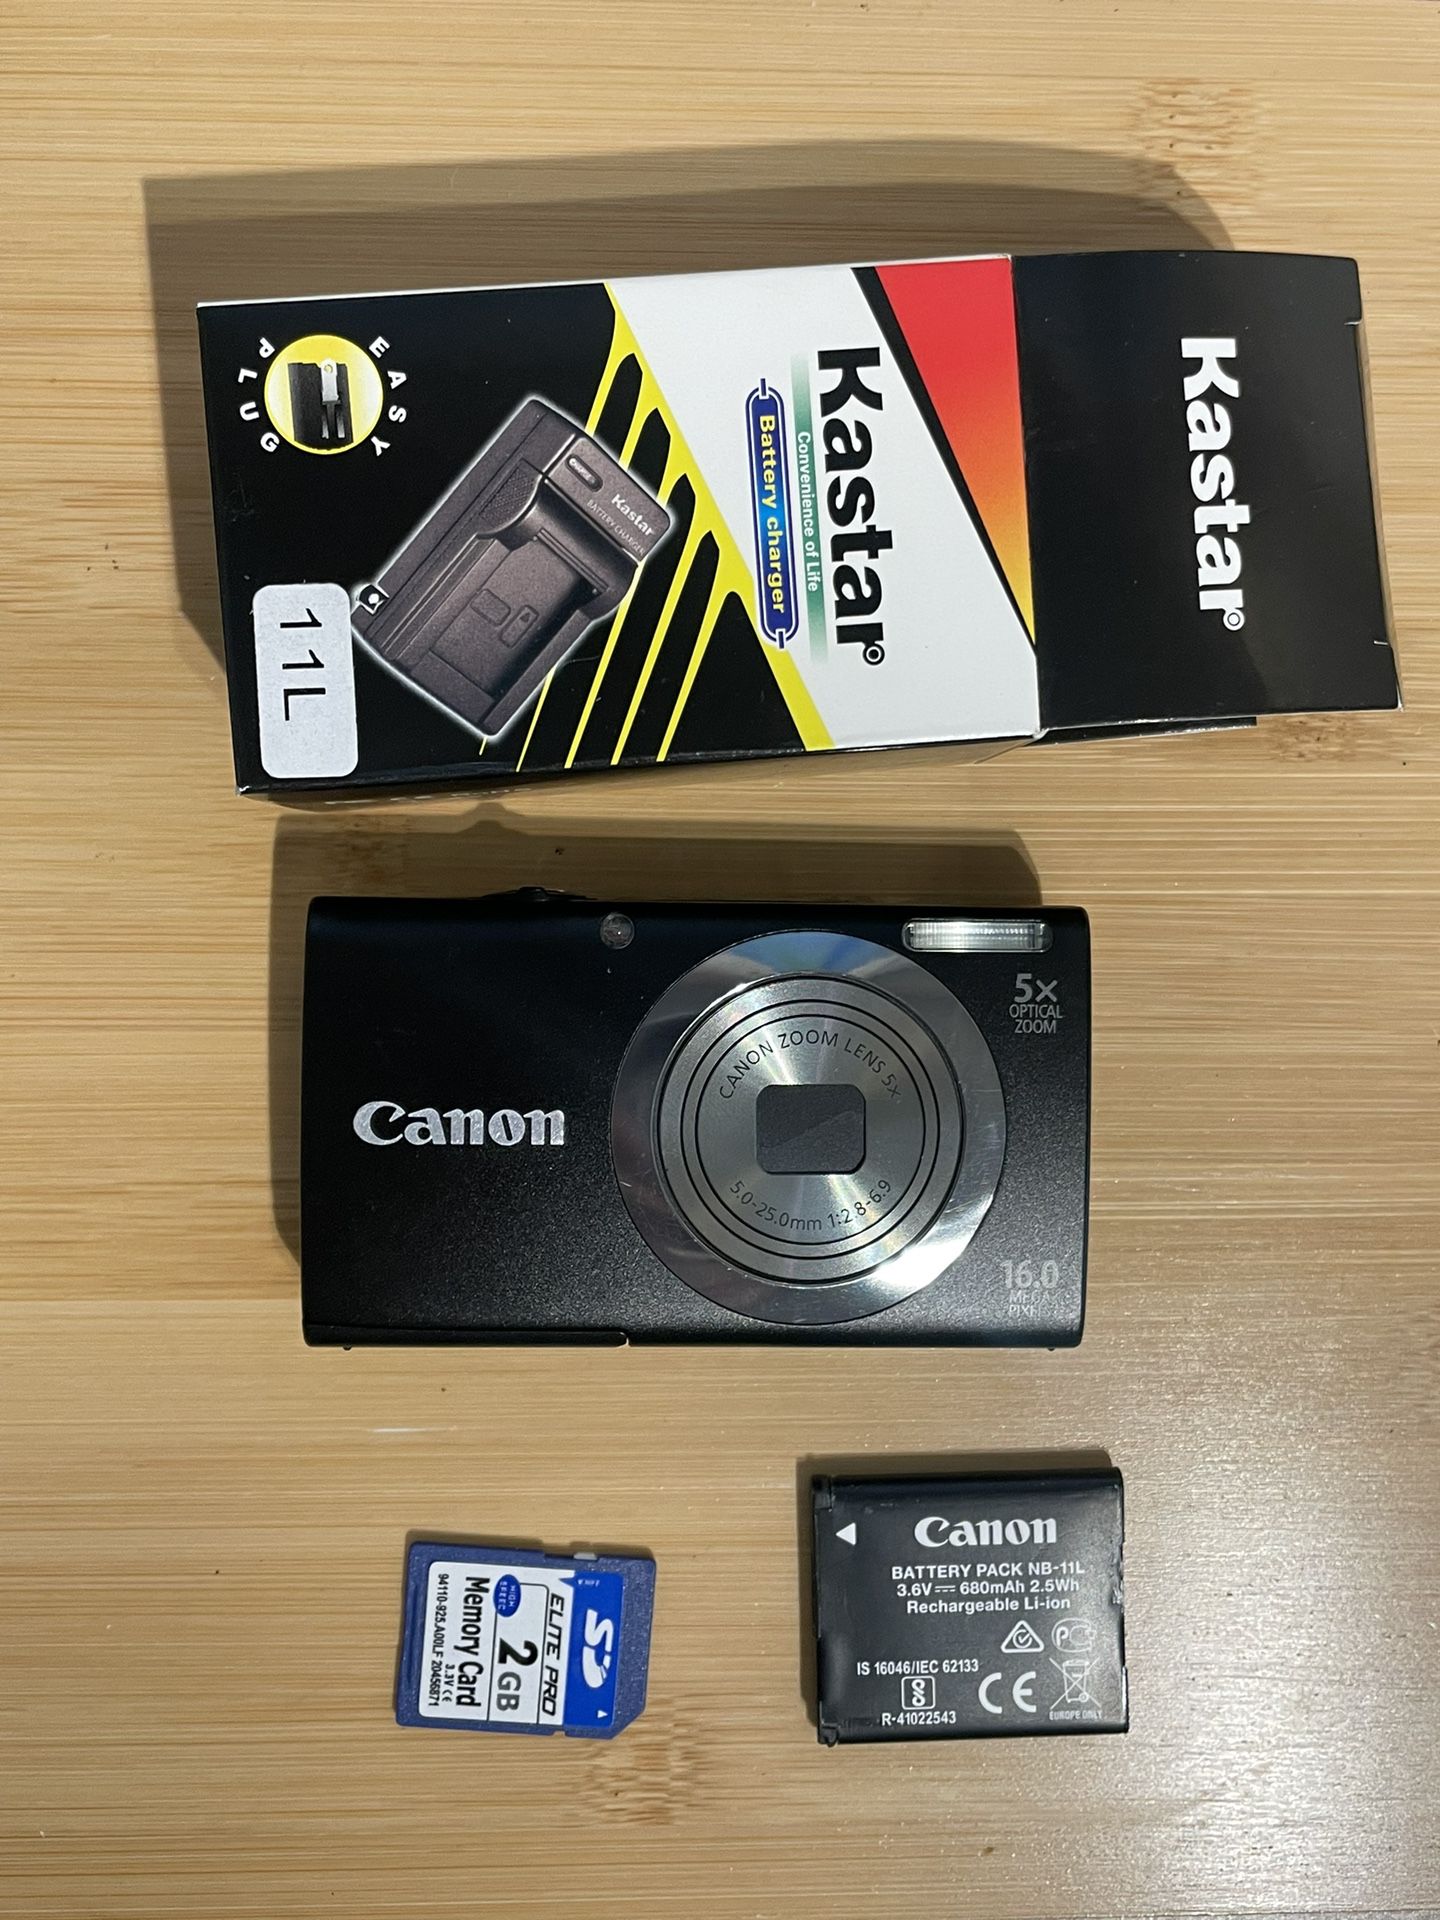 Canon Powershot A2300 Black Digital Camera - Tested Works